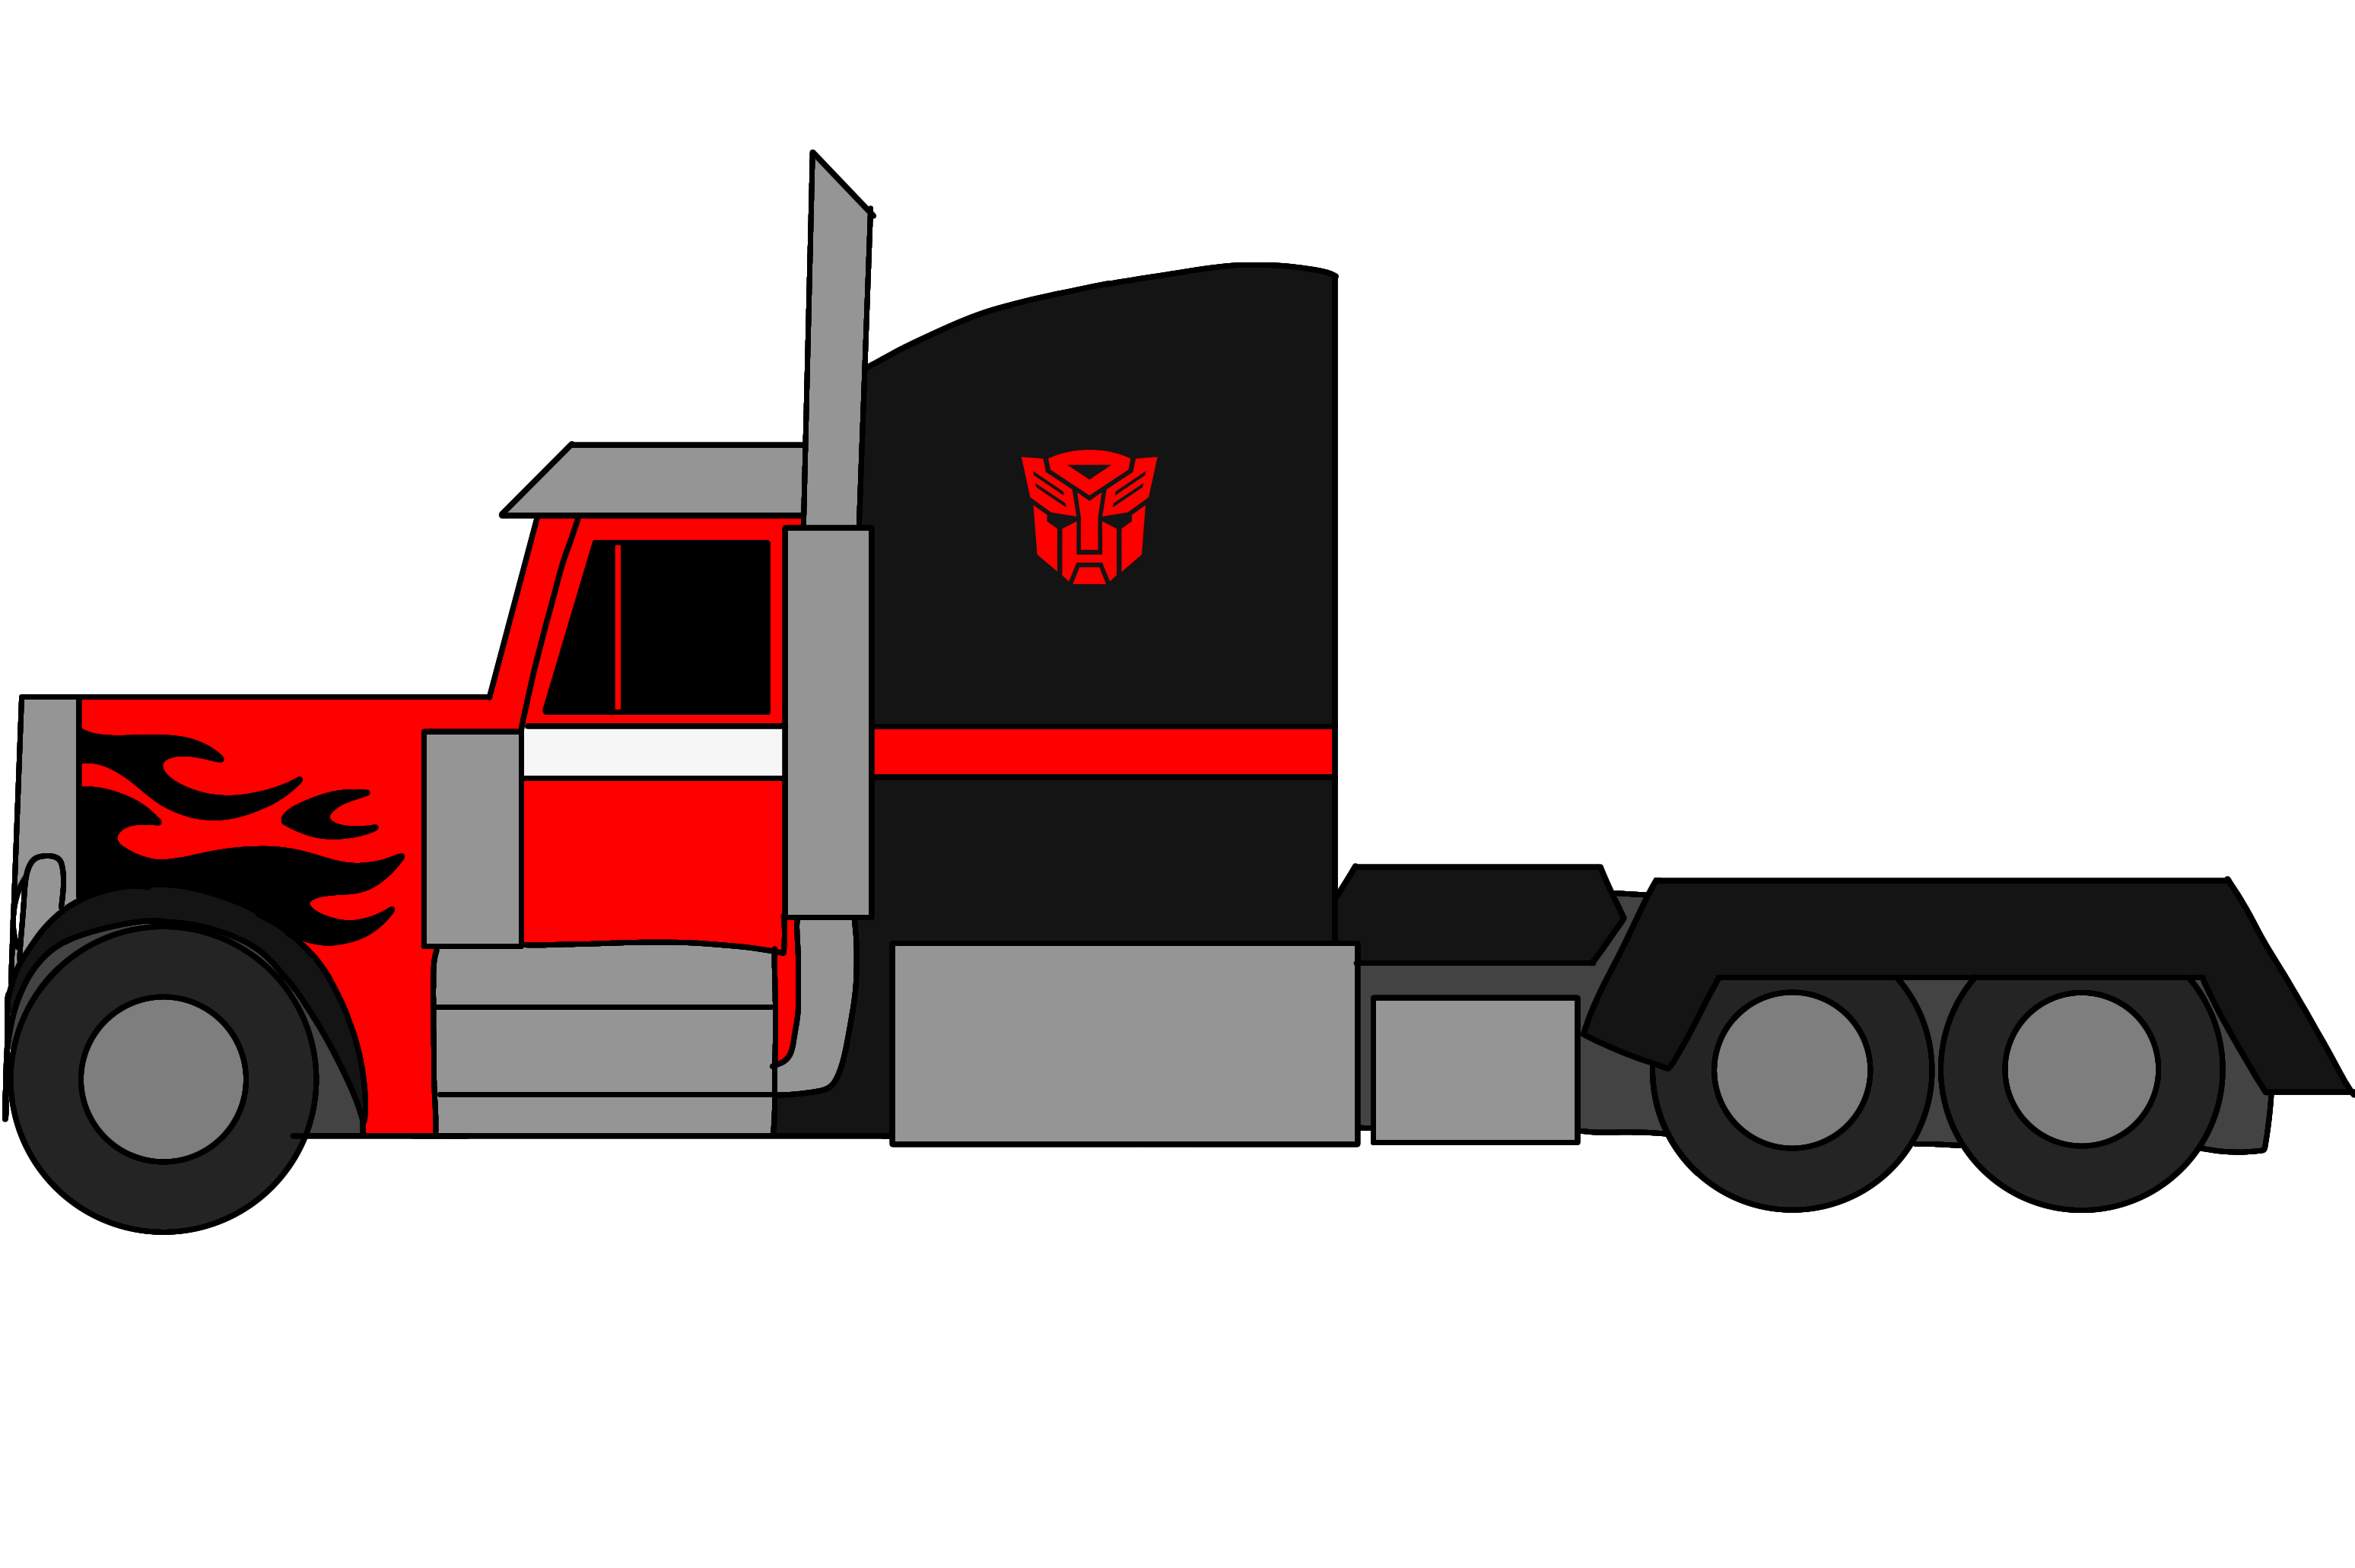 Transformers Legacy Optimus Prime Truck Version 2 by gcjdfkjbrfguithgiuht  on DeviantArt